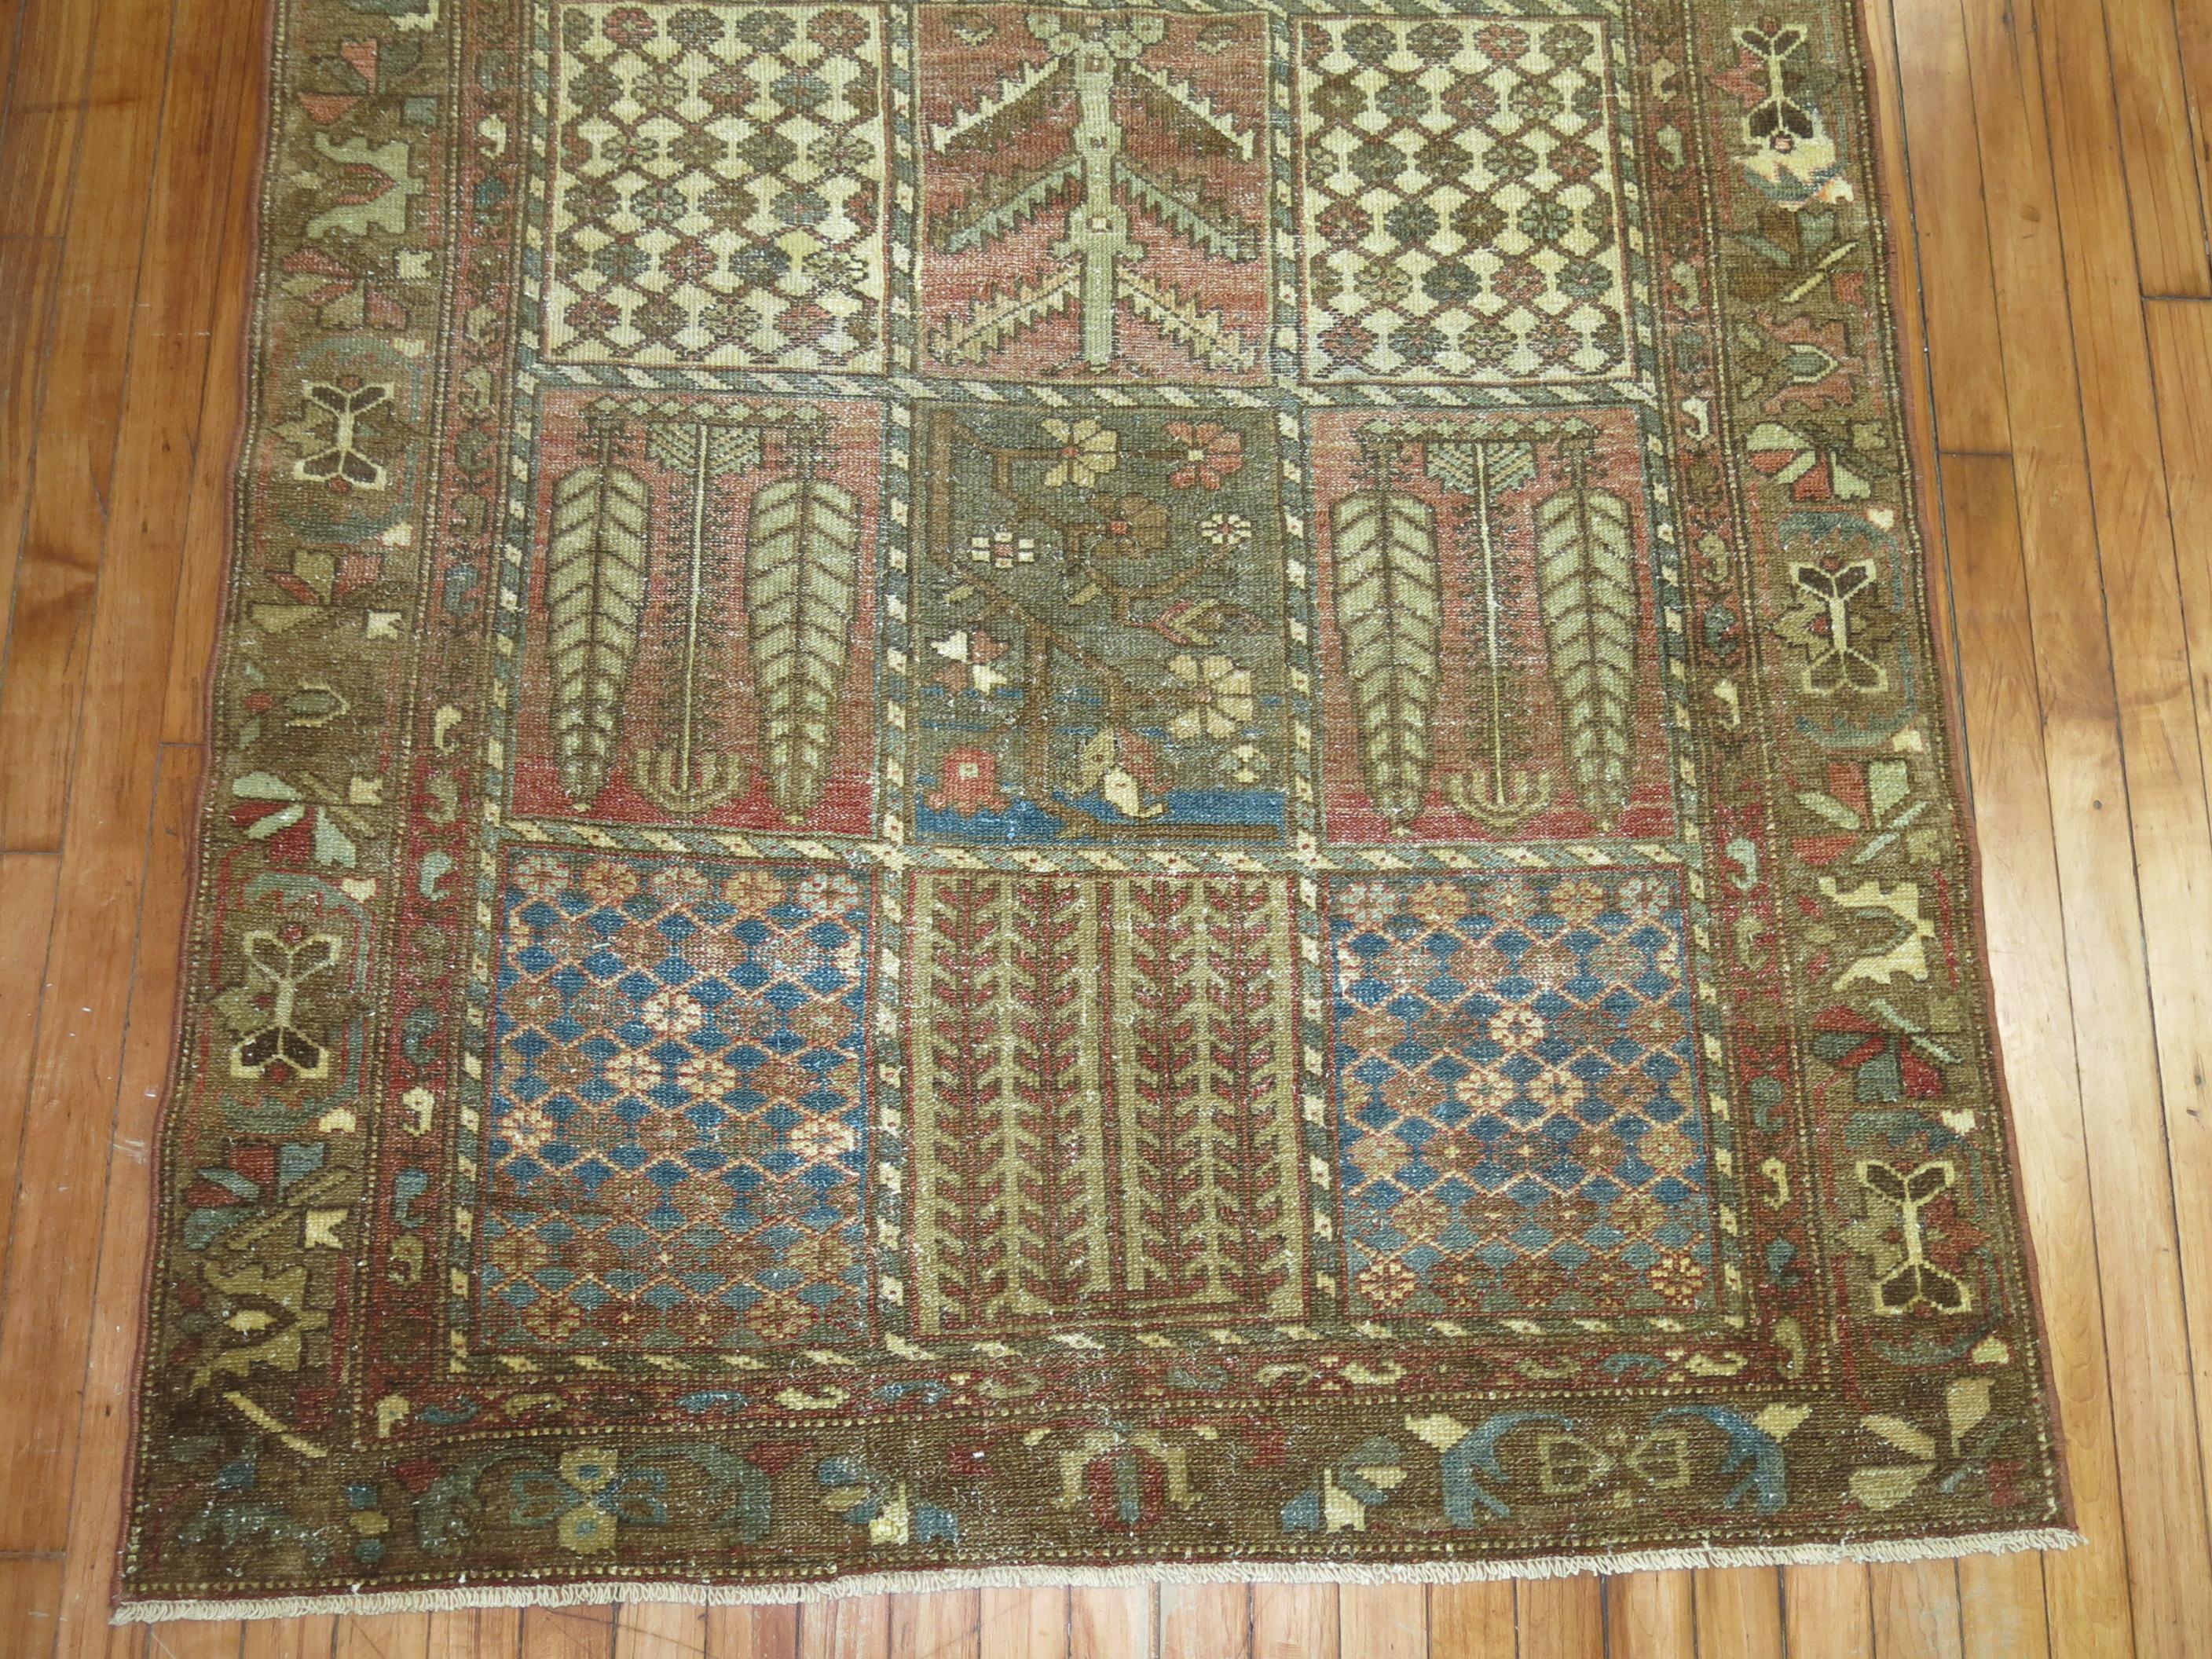 An antique Persian Bakhtiari rug with all-over garden box niche motif in earth tones